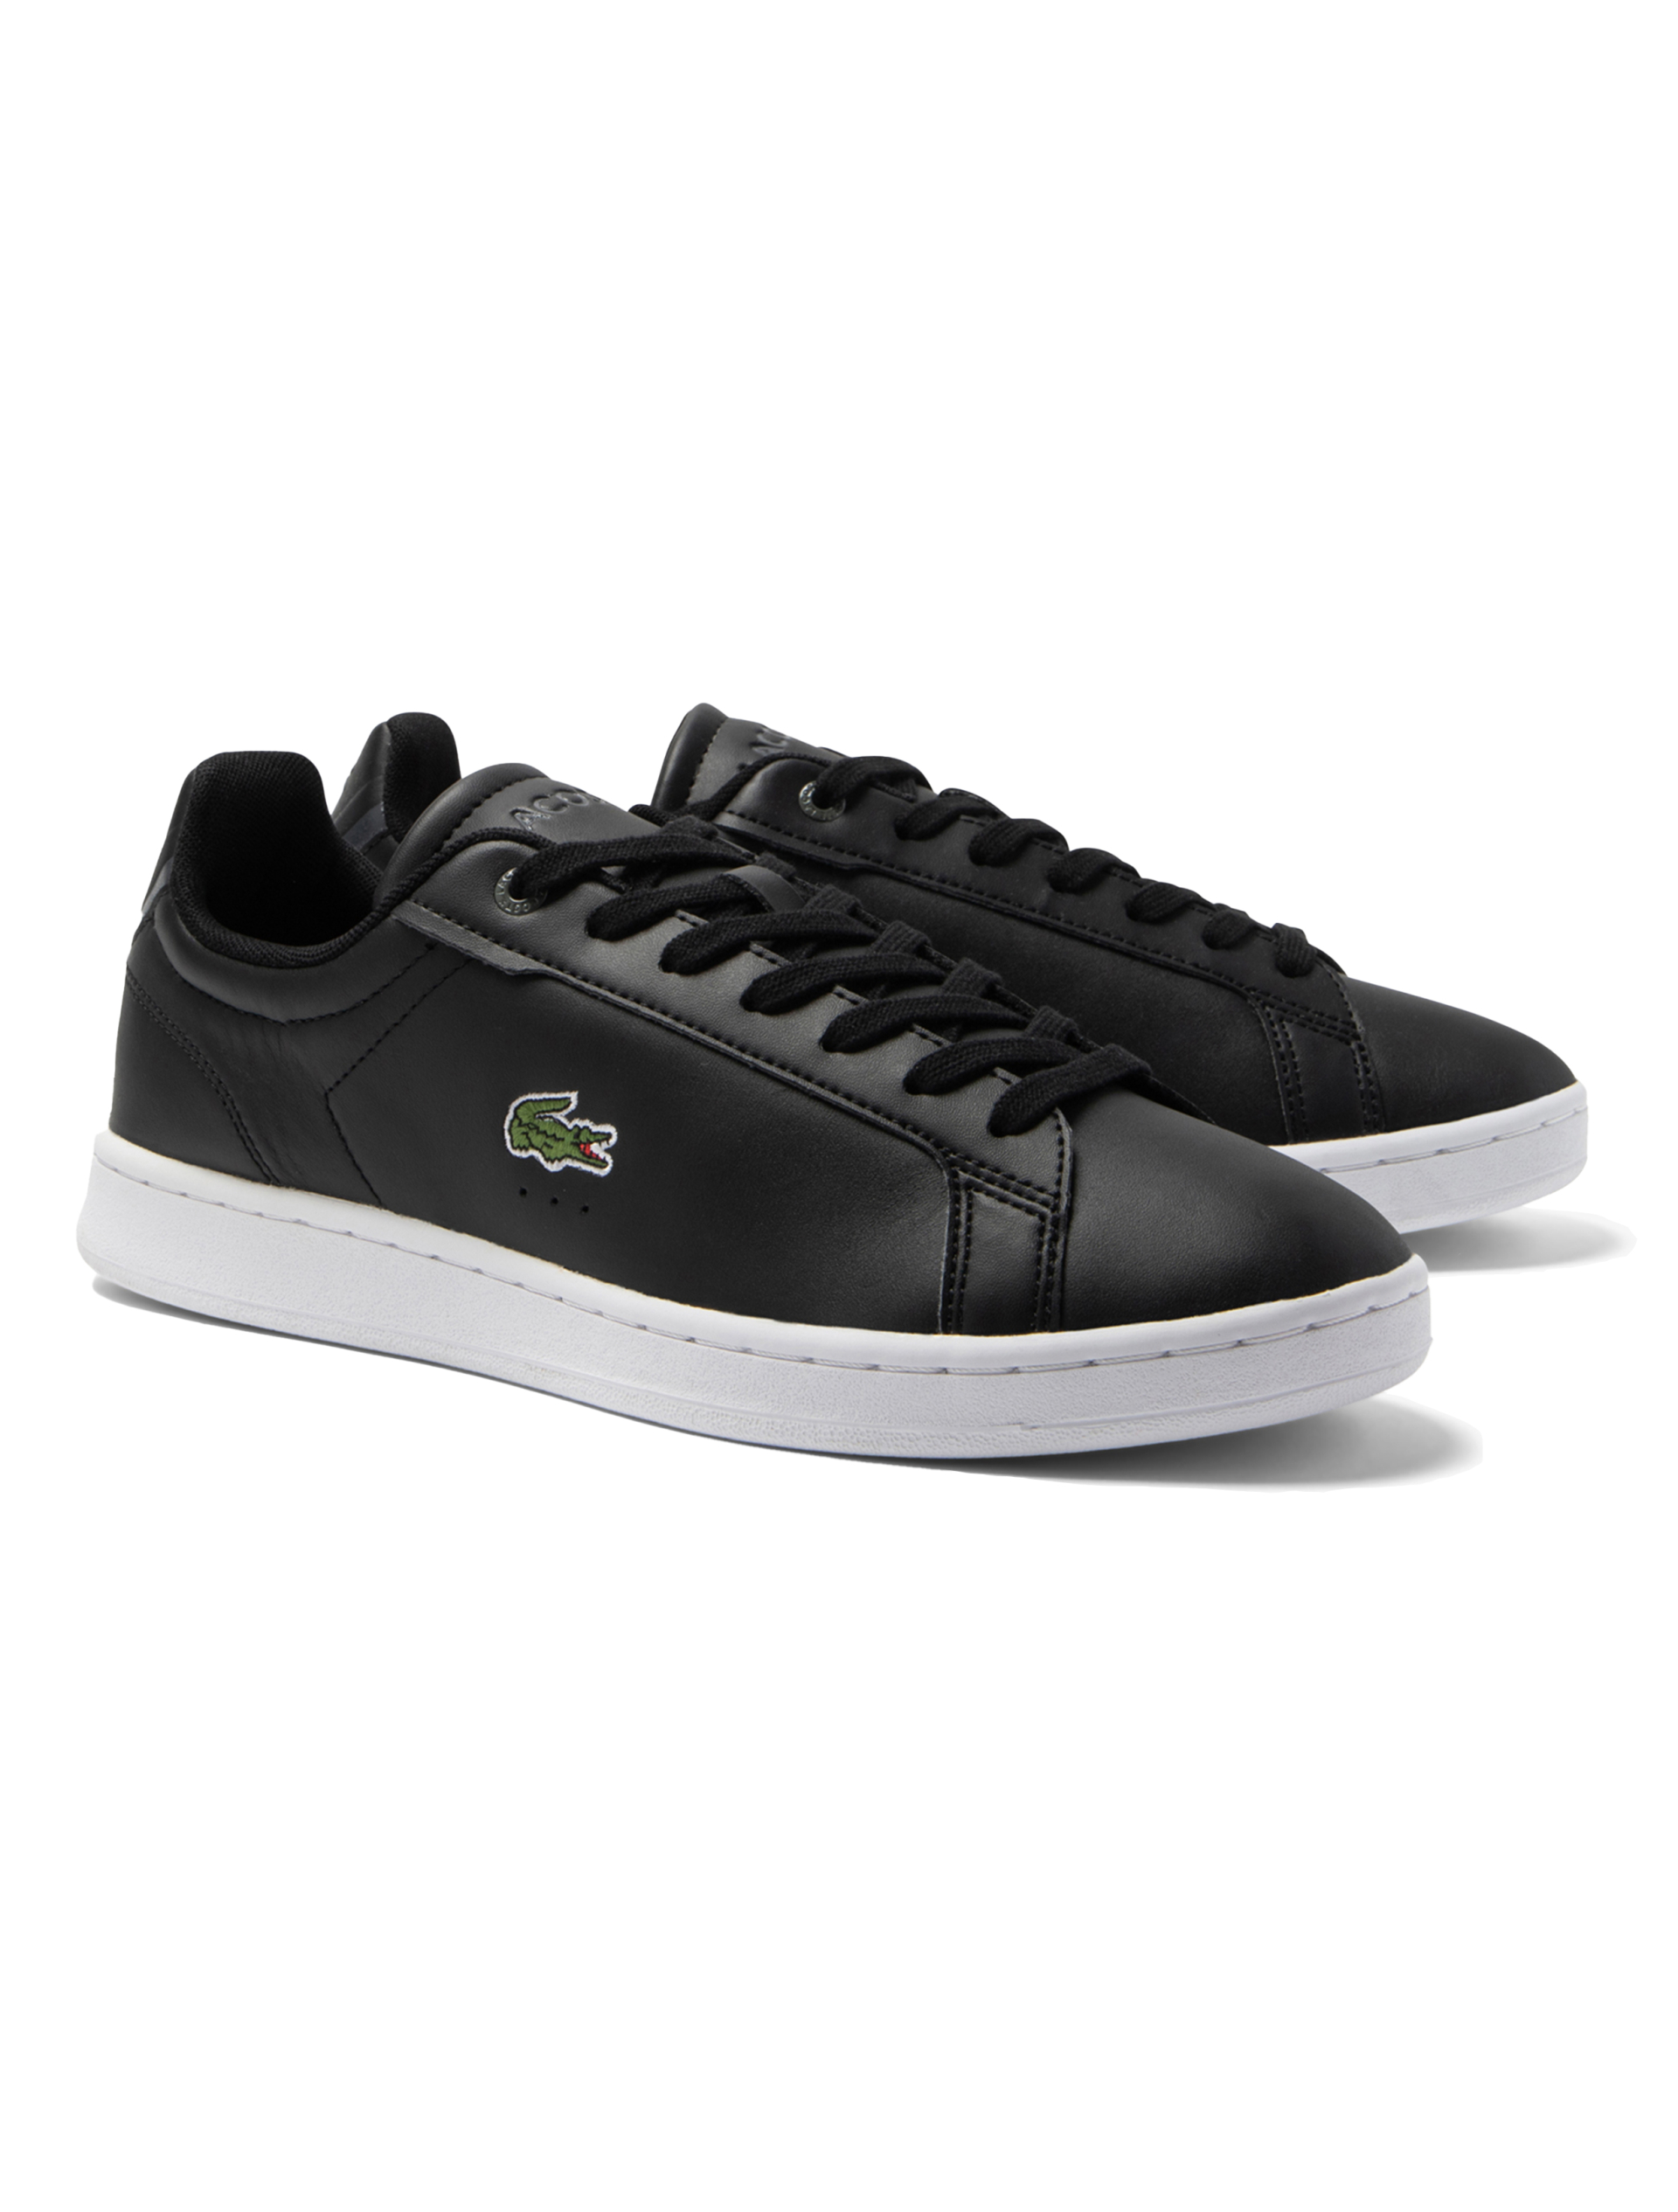 Lacoste Sneakers sort / 312 black/white